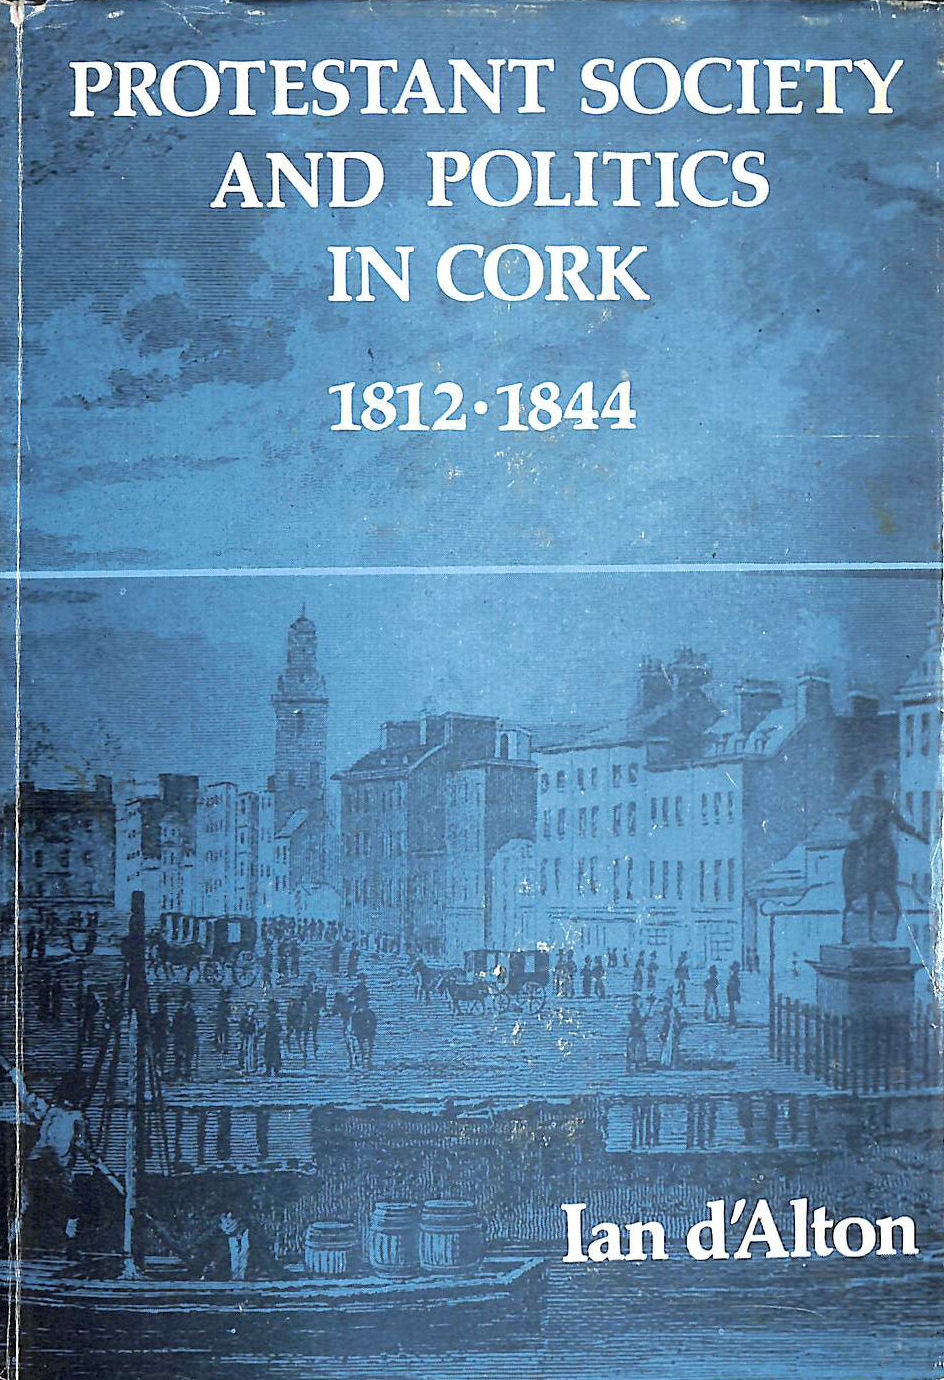 IAN D'ALTON - Protestant Society and Politics in Cork, 1812-44